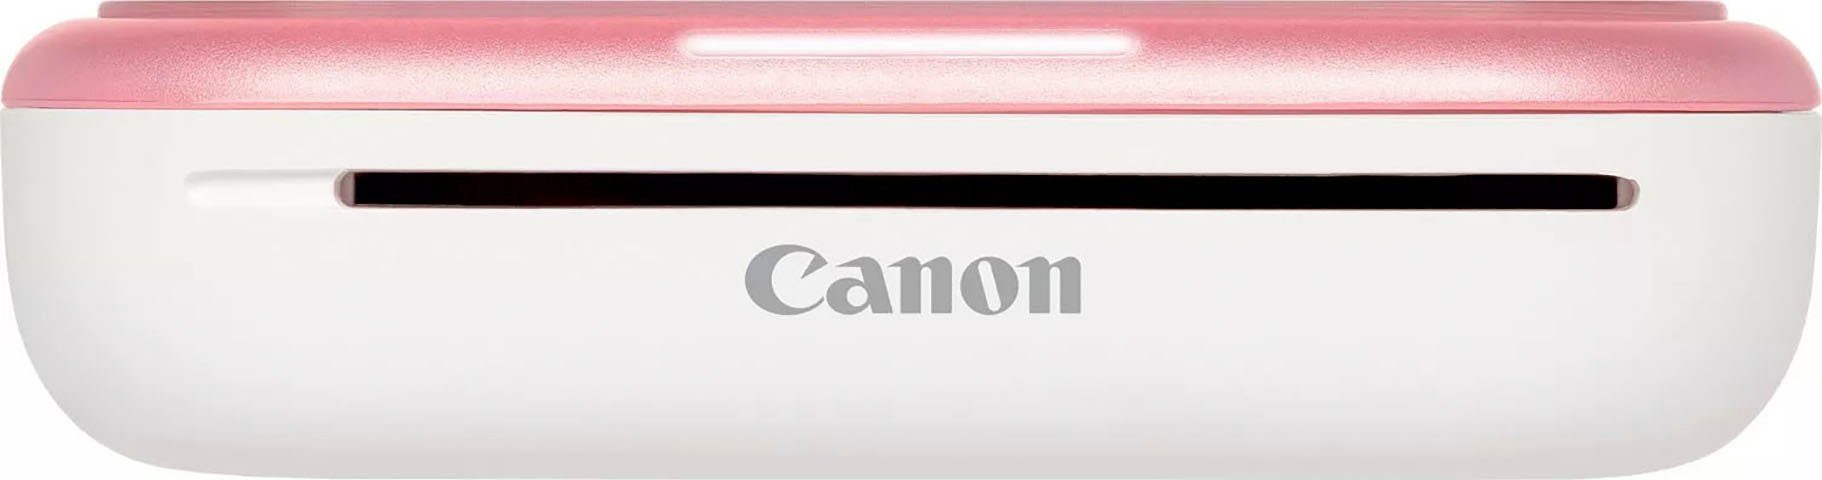 Canon Zoemini 2 Фотопринтер, (Bluetooth)